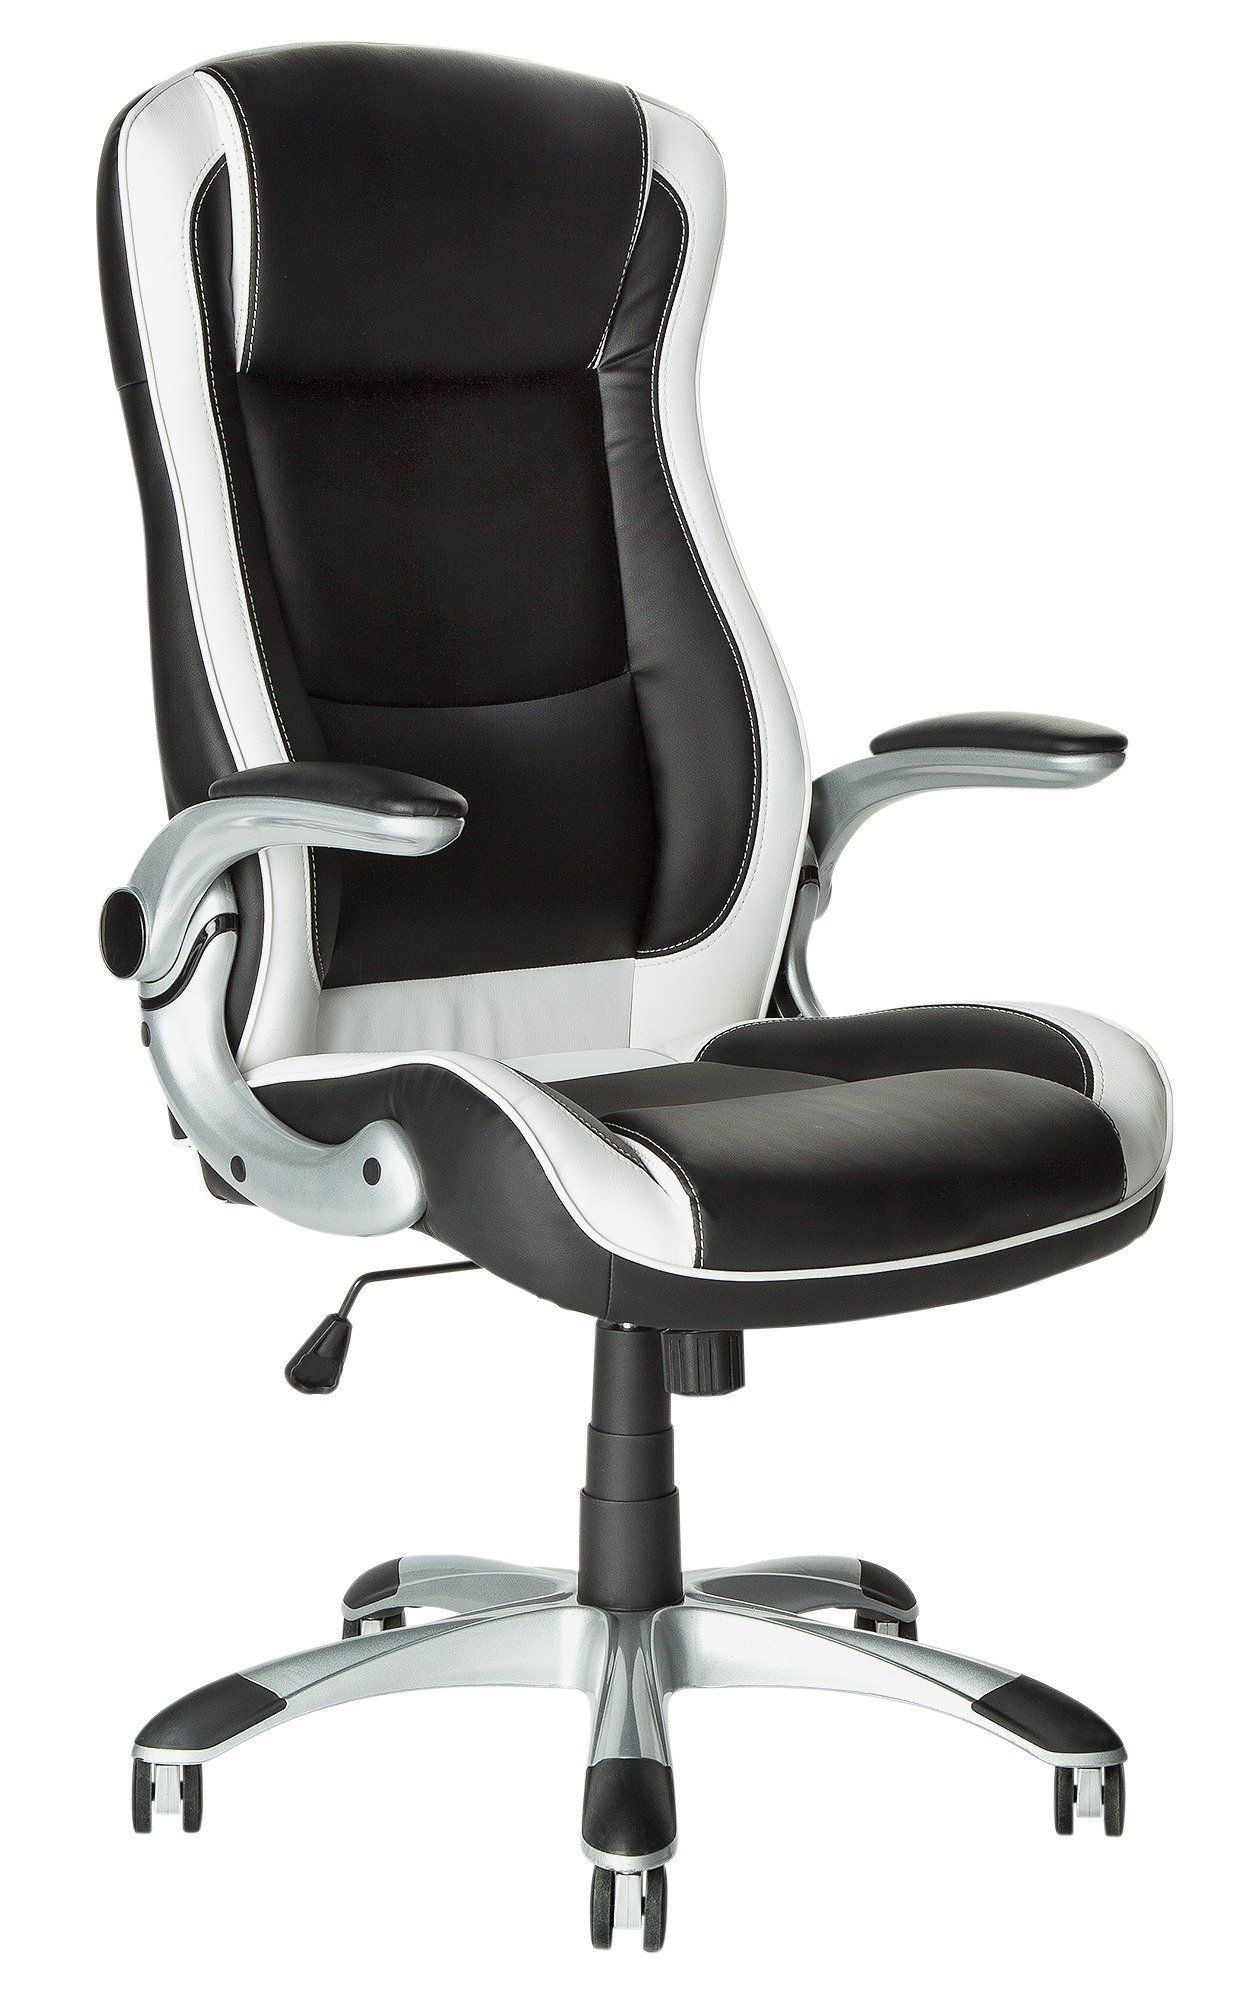 Argos Home Dexter Height Adjustable Office Chair - Blk/White (4242833